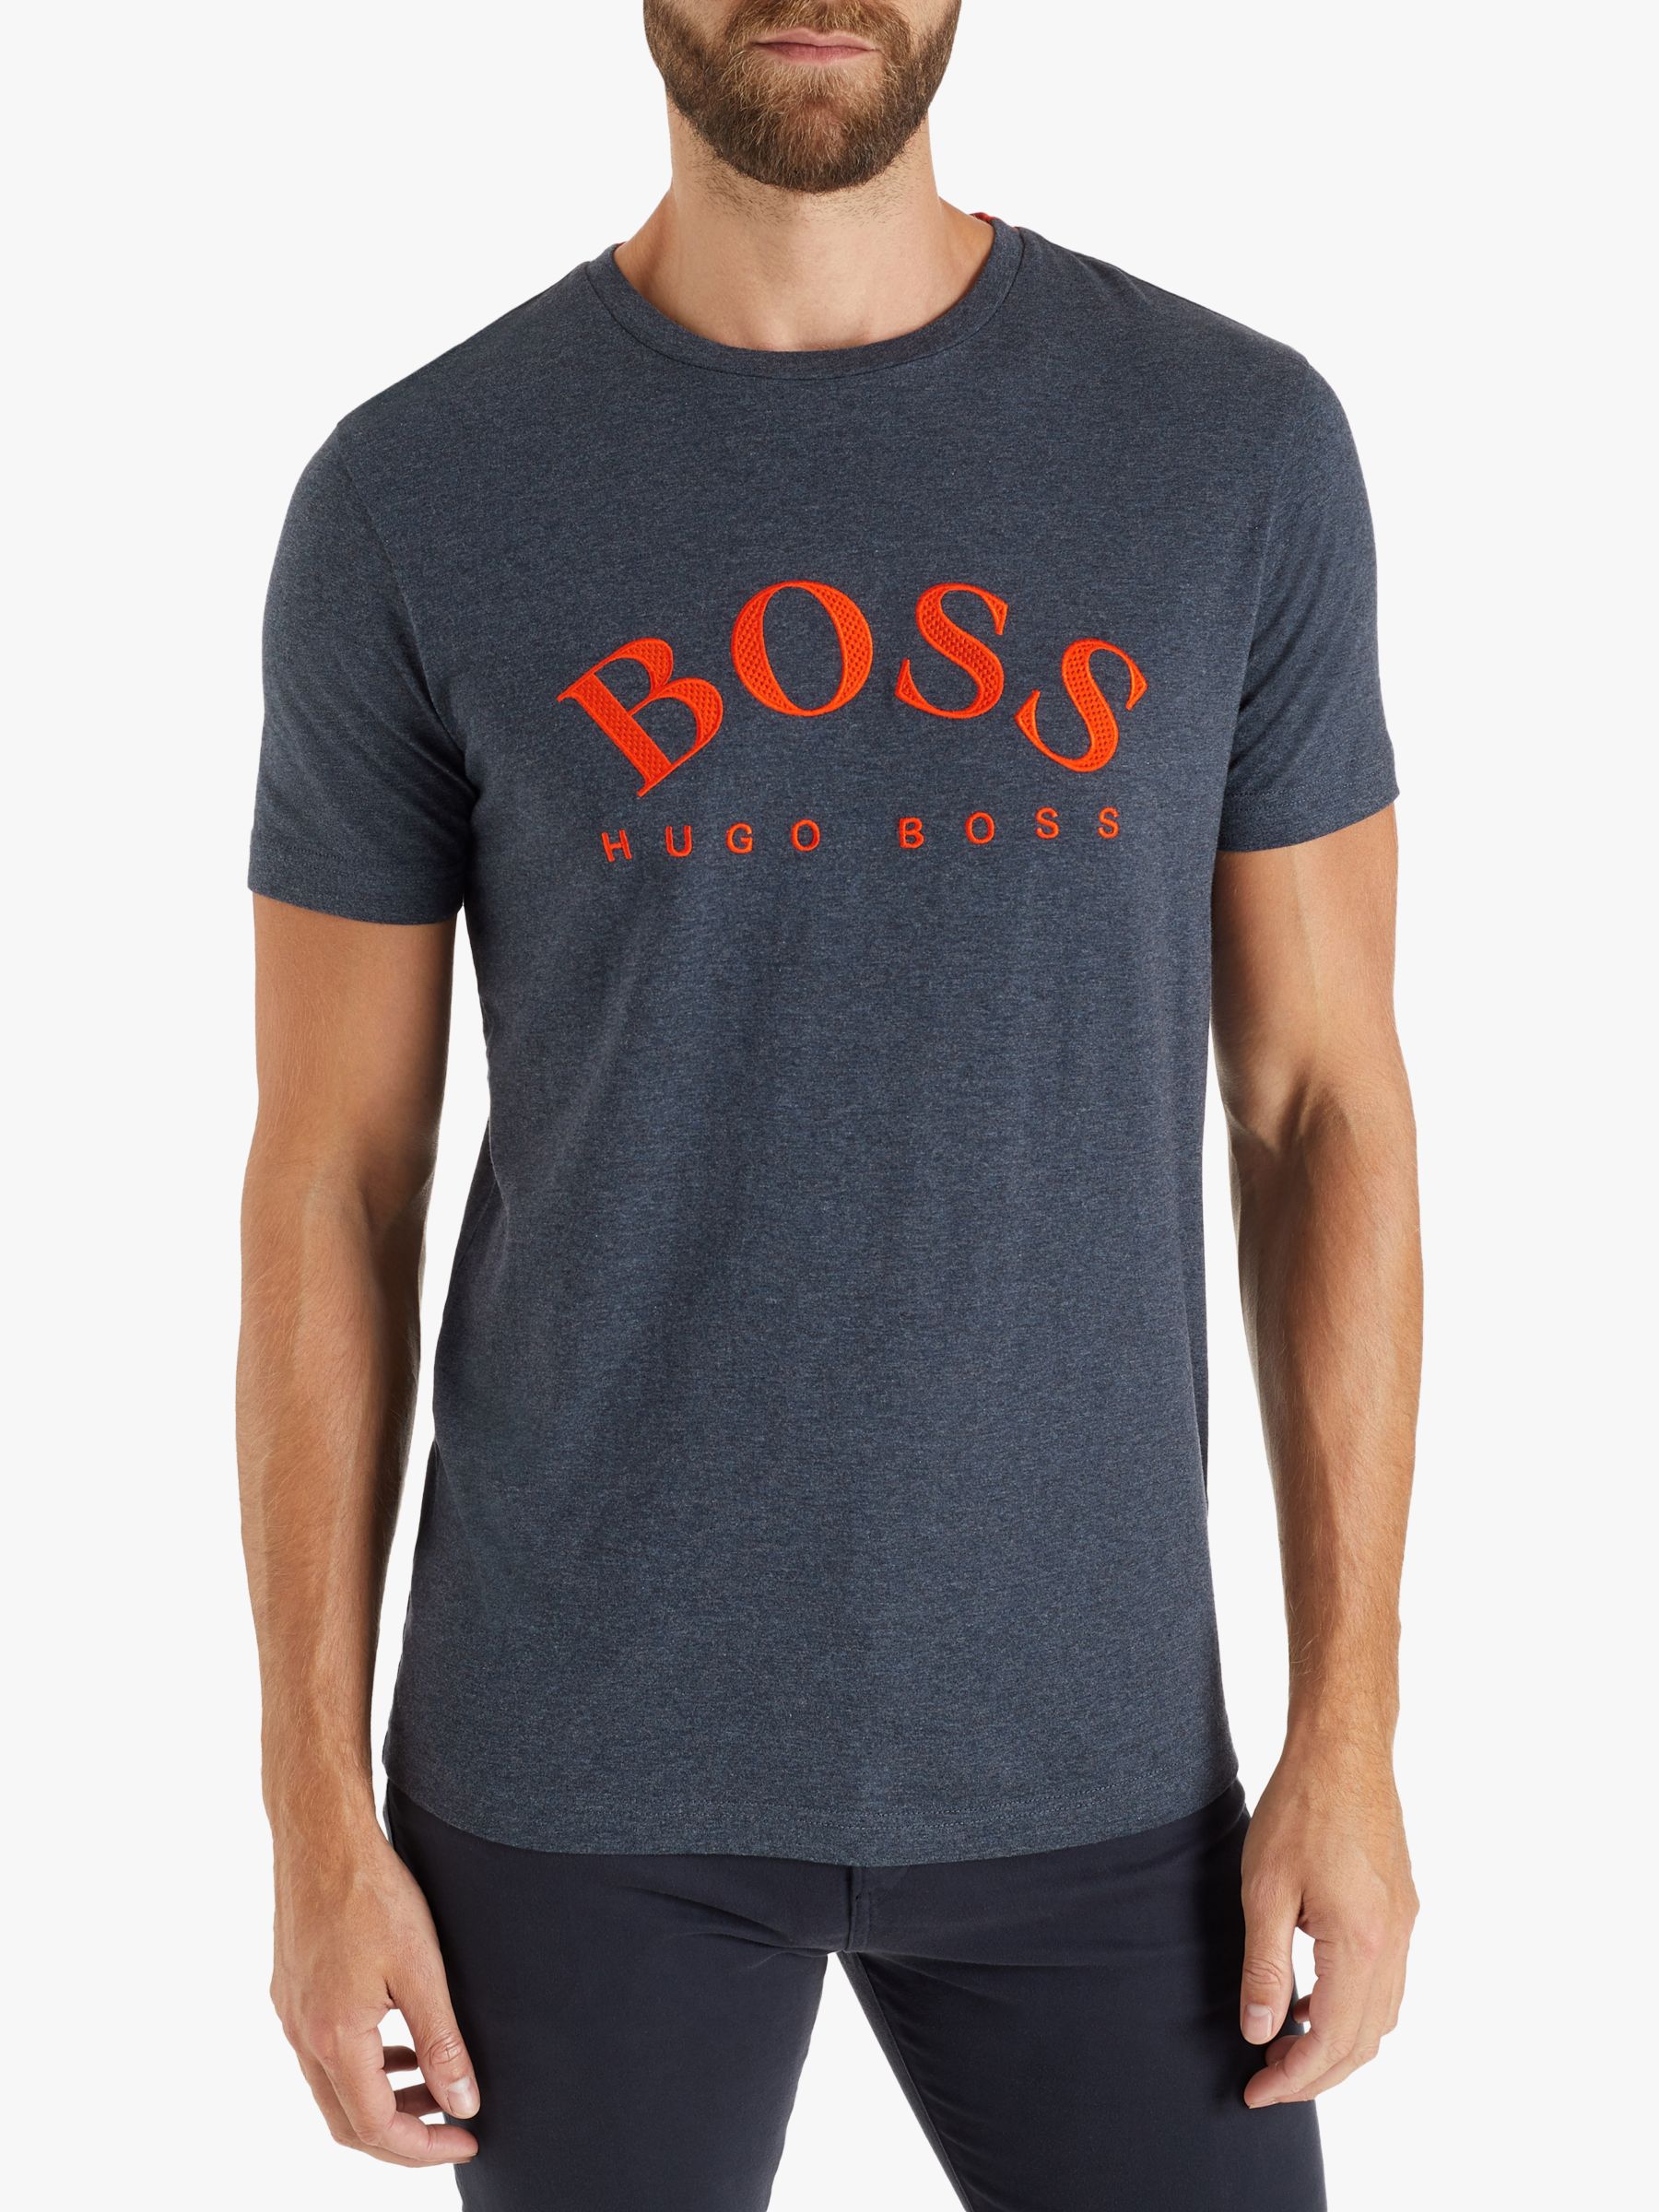 HUGO BOSS | Men's T-Shirts | John Lewis & Partners